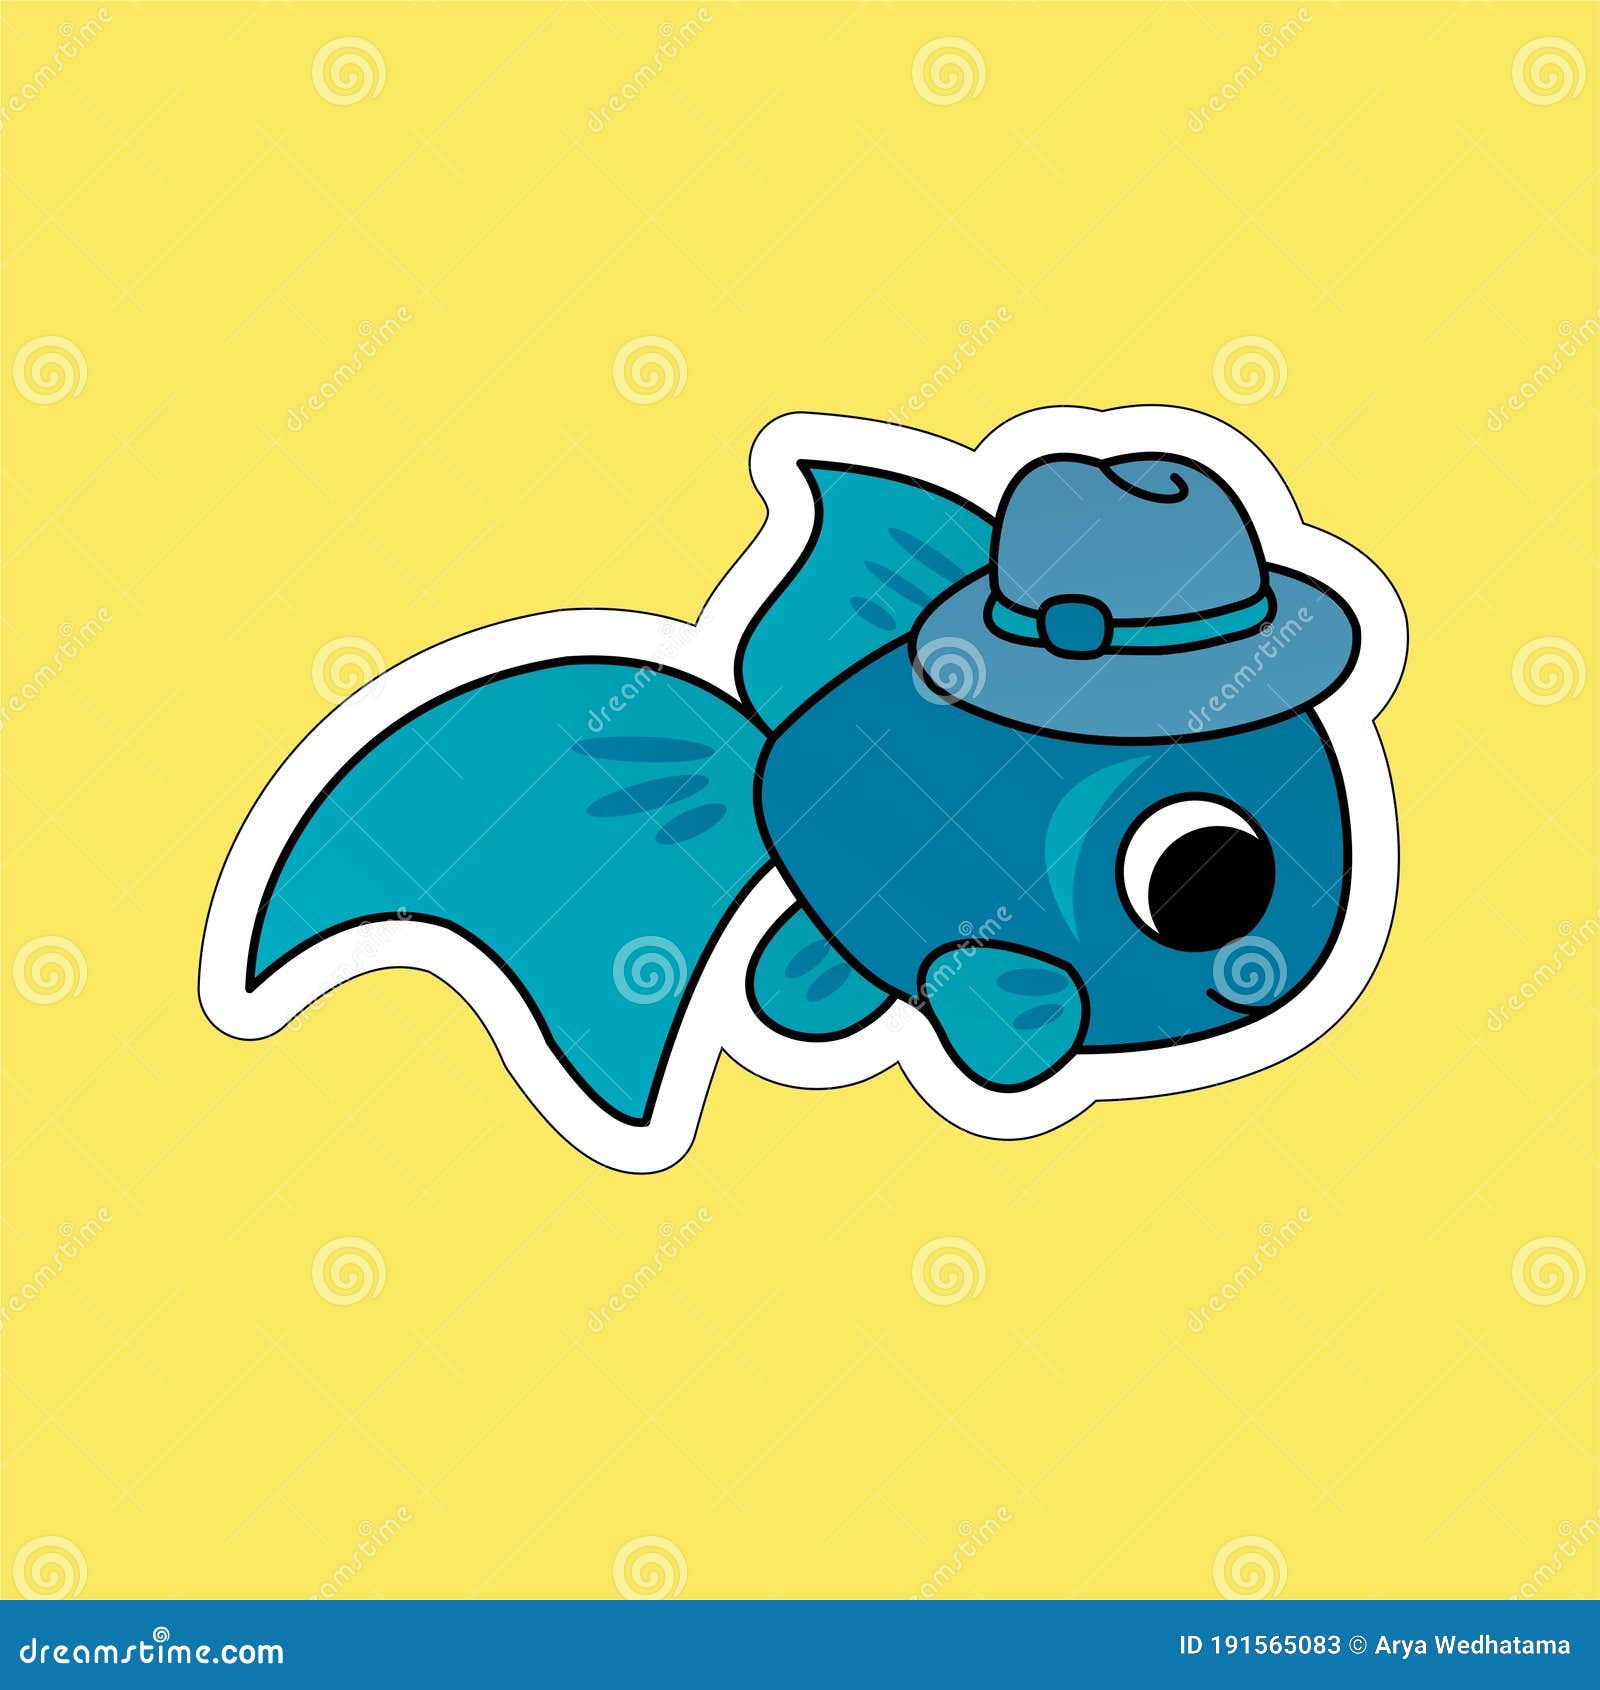 Stickers of Blue Fish Wearing a Hat Cartoon, Cute Funny Character, Flat  Design Stock Illustration - Illustration of aquarium, hope: 191565083